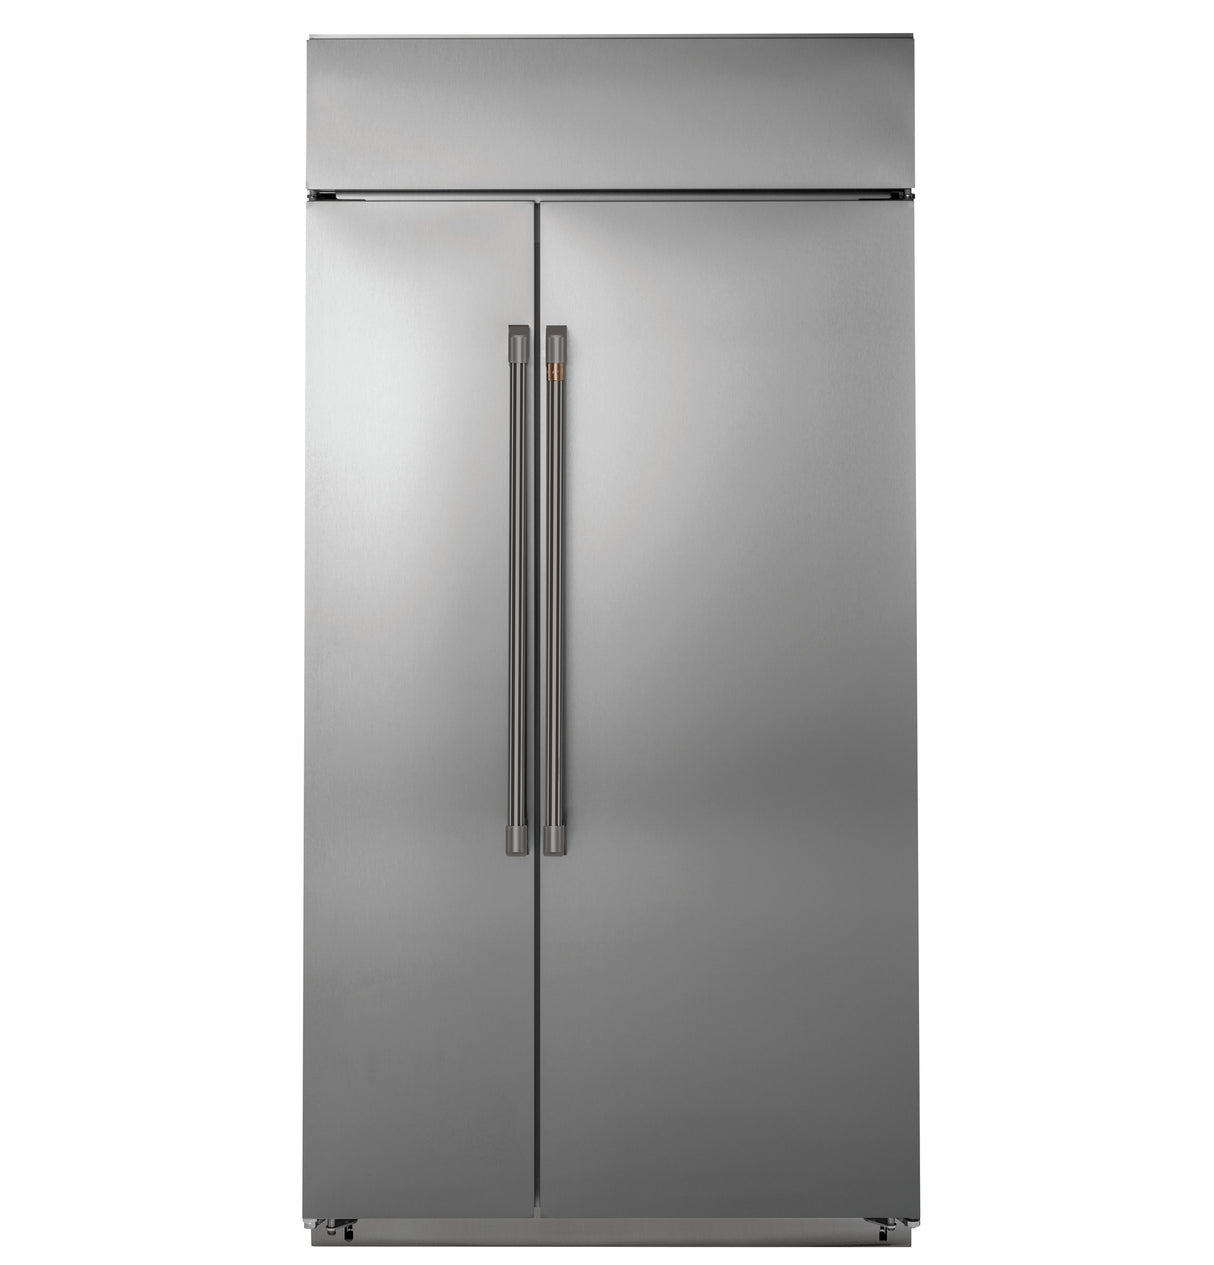 Caf(eback)(TM) 48" Smart Built-In Side-by-Side Refrigerator - (CSB48WP2NS1)